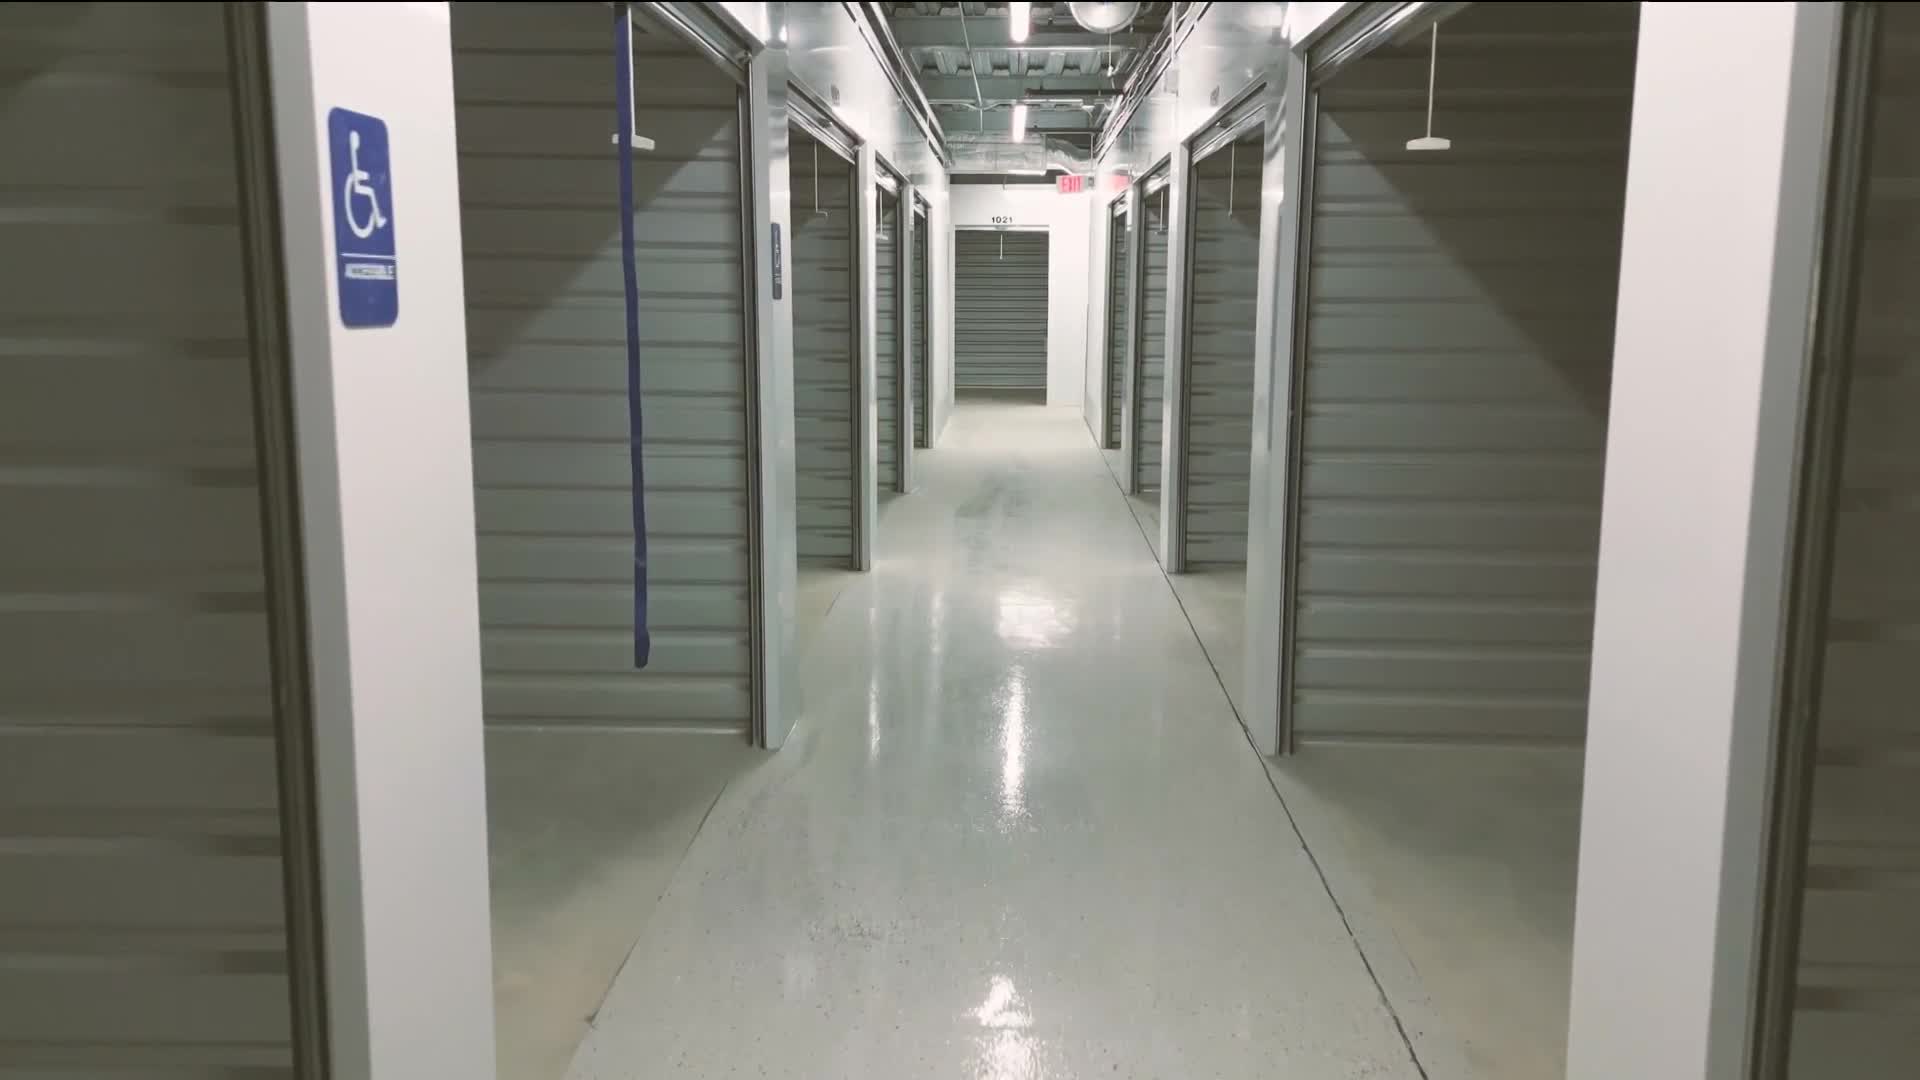 ProSafe Storage’s newest location